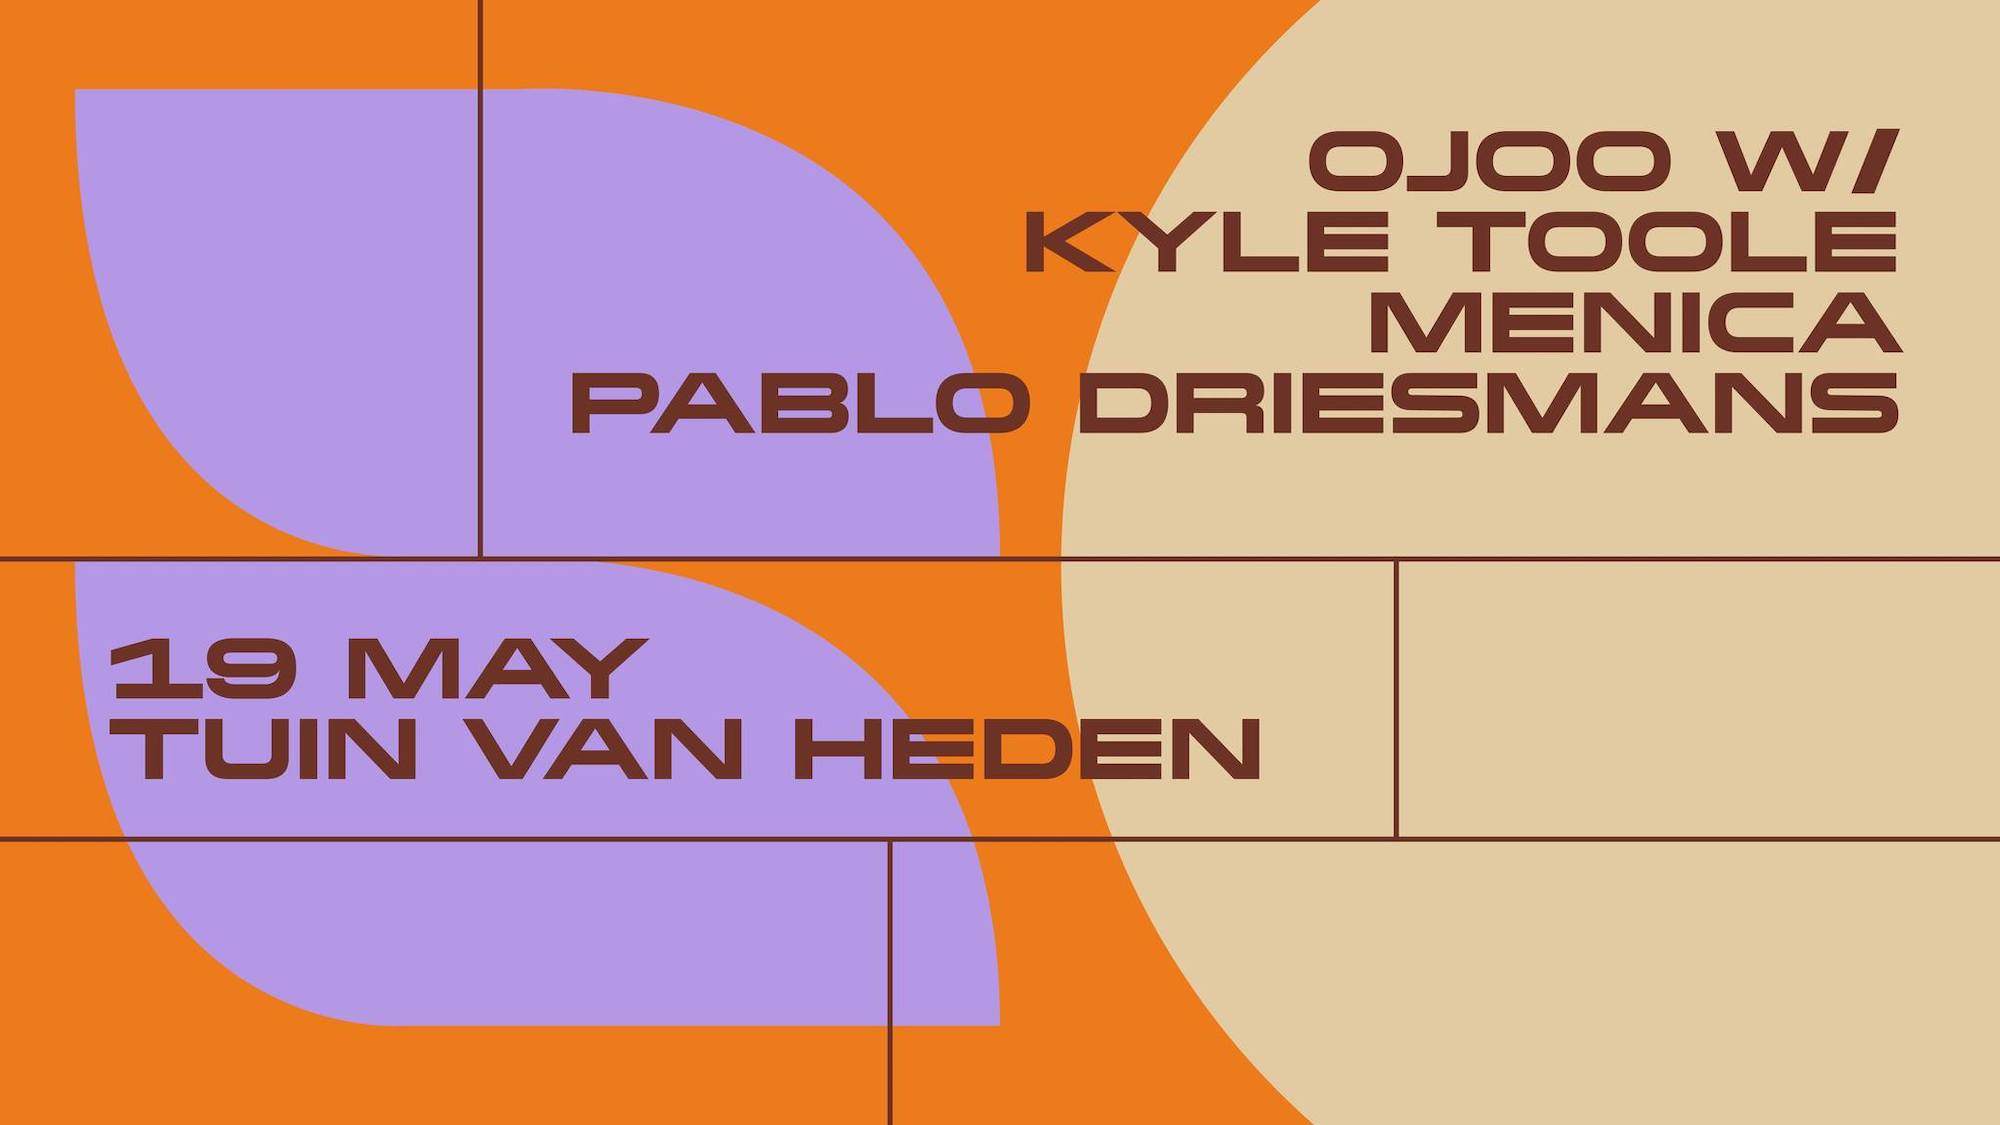 Ojoo 7Y - Open Air w/ Kyle Toole, Menica, Pablo Driesmans - フライヤー表